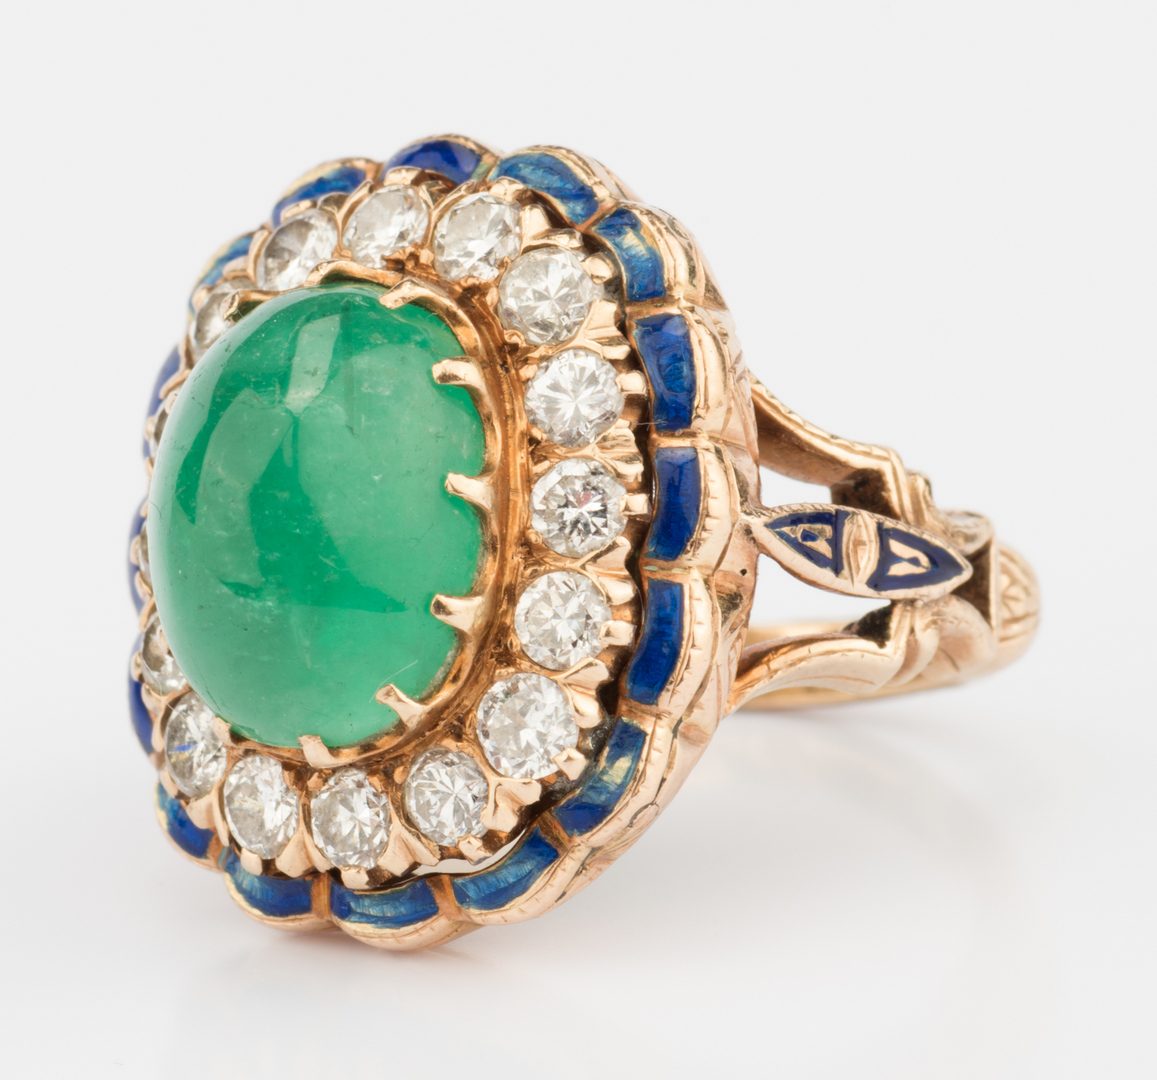 Lot 55: Emerald, Diamond and Enamel Ring